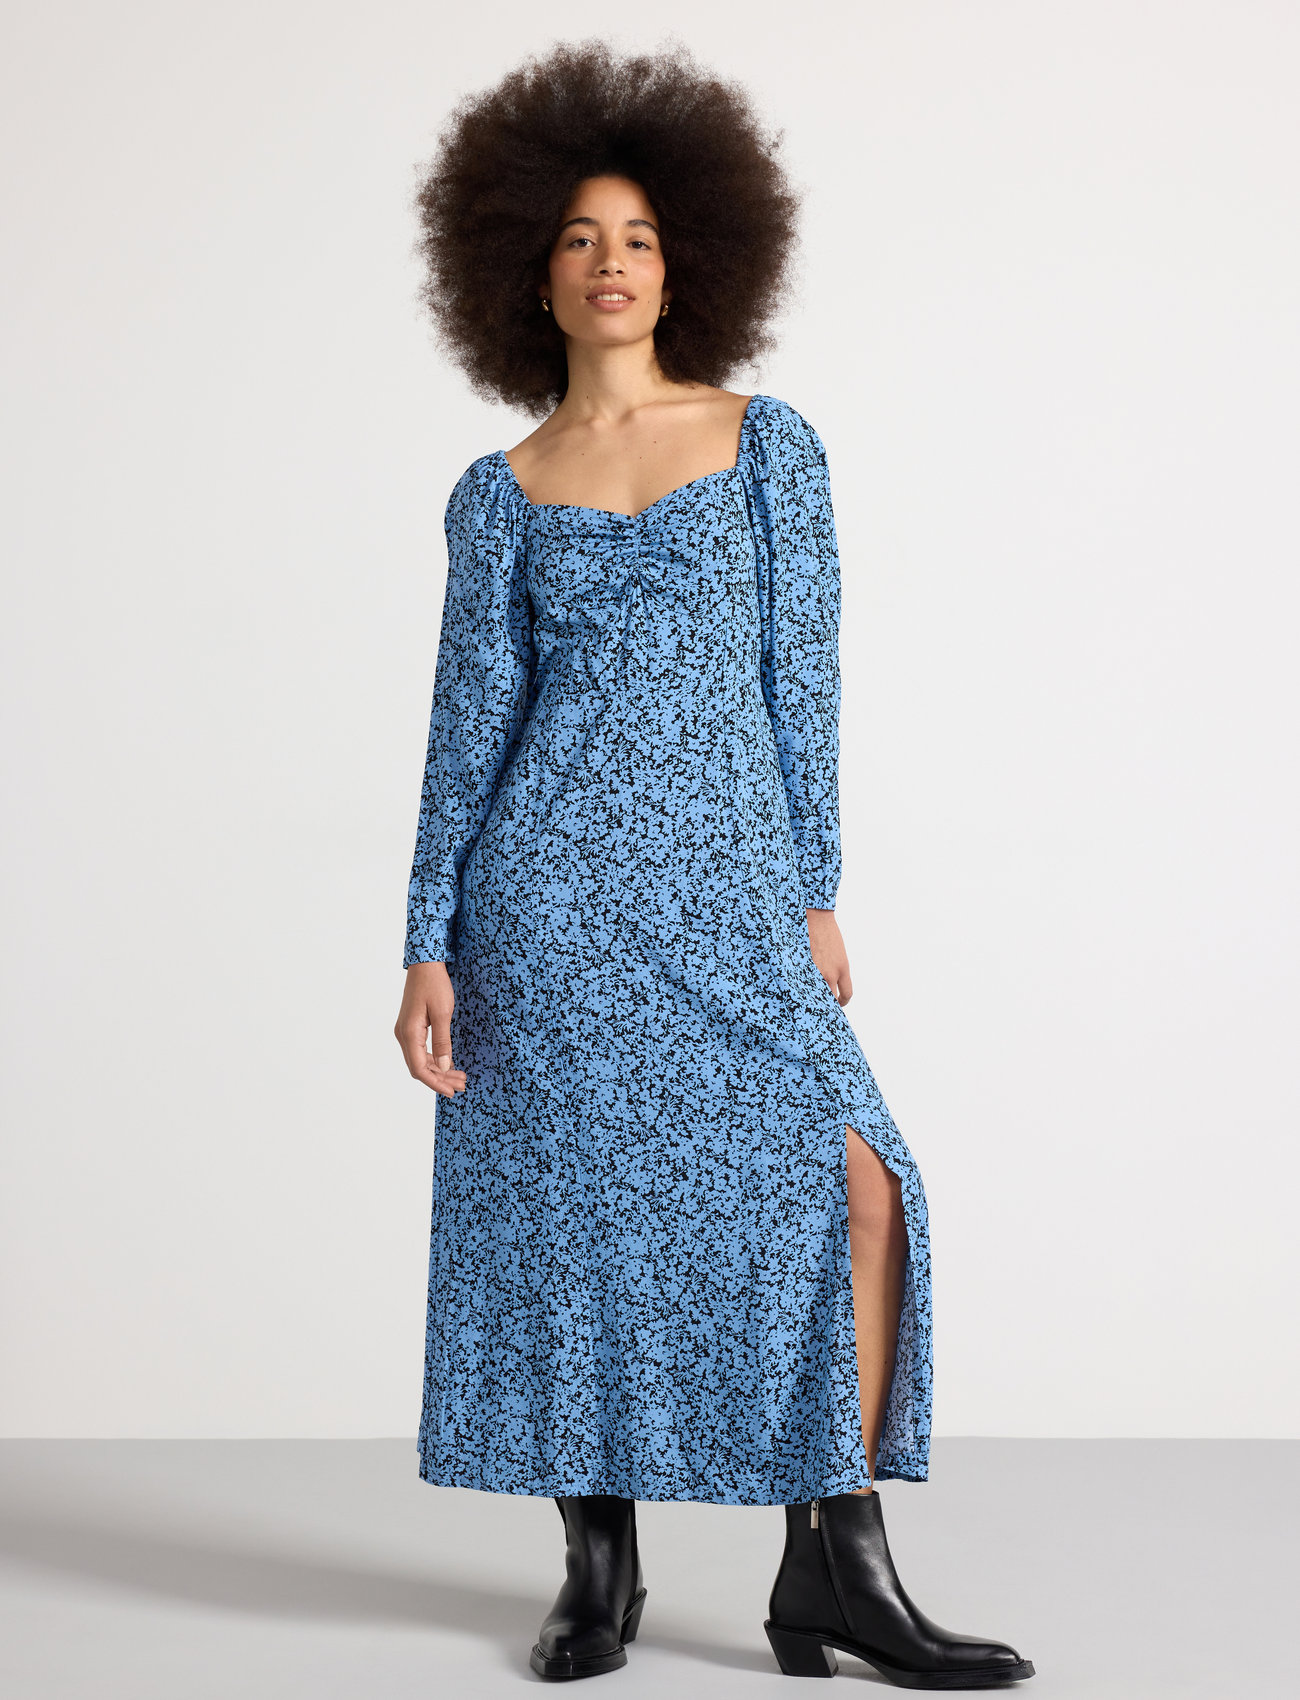 Lindex - Dress Rosie - maksimekot - light dusty blue - 1